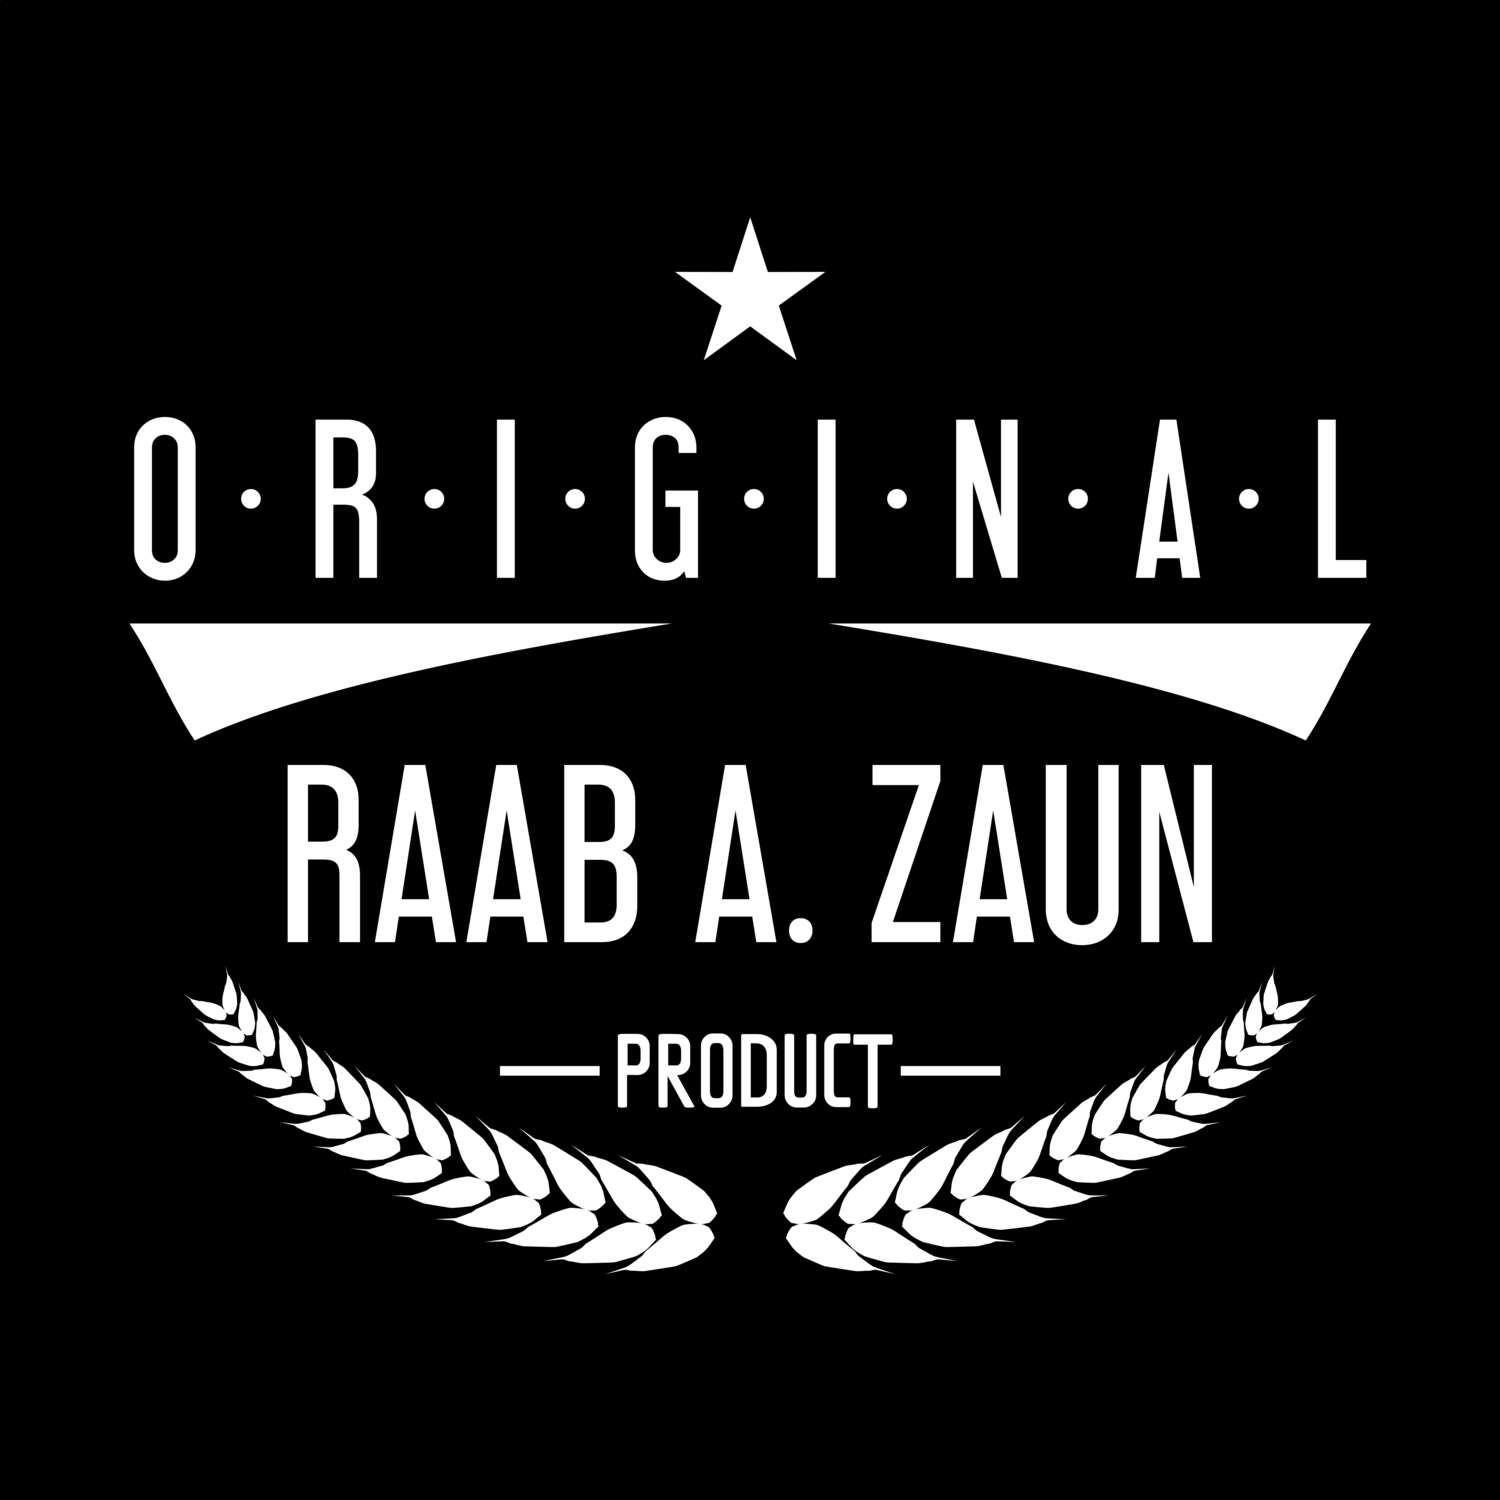 Raab a. Zaun T-Shirt »Original Product«